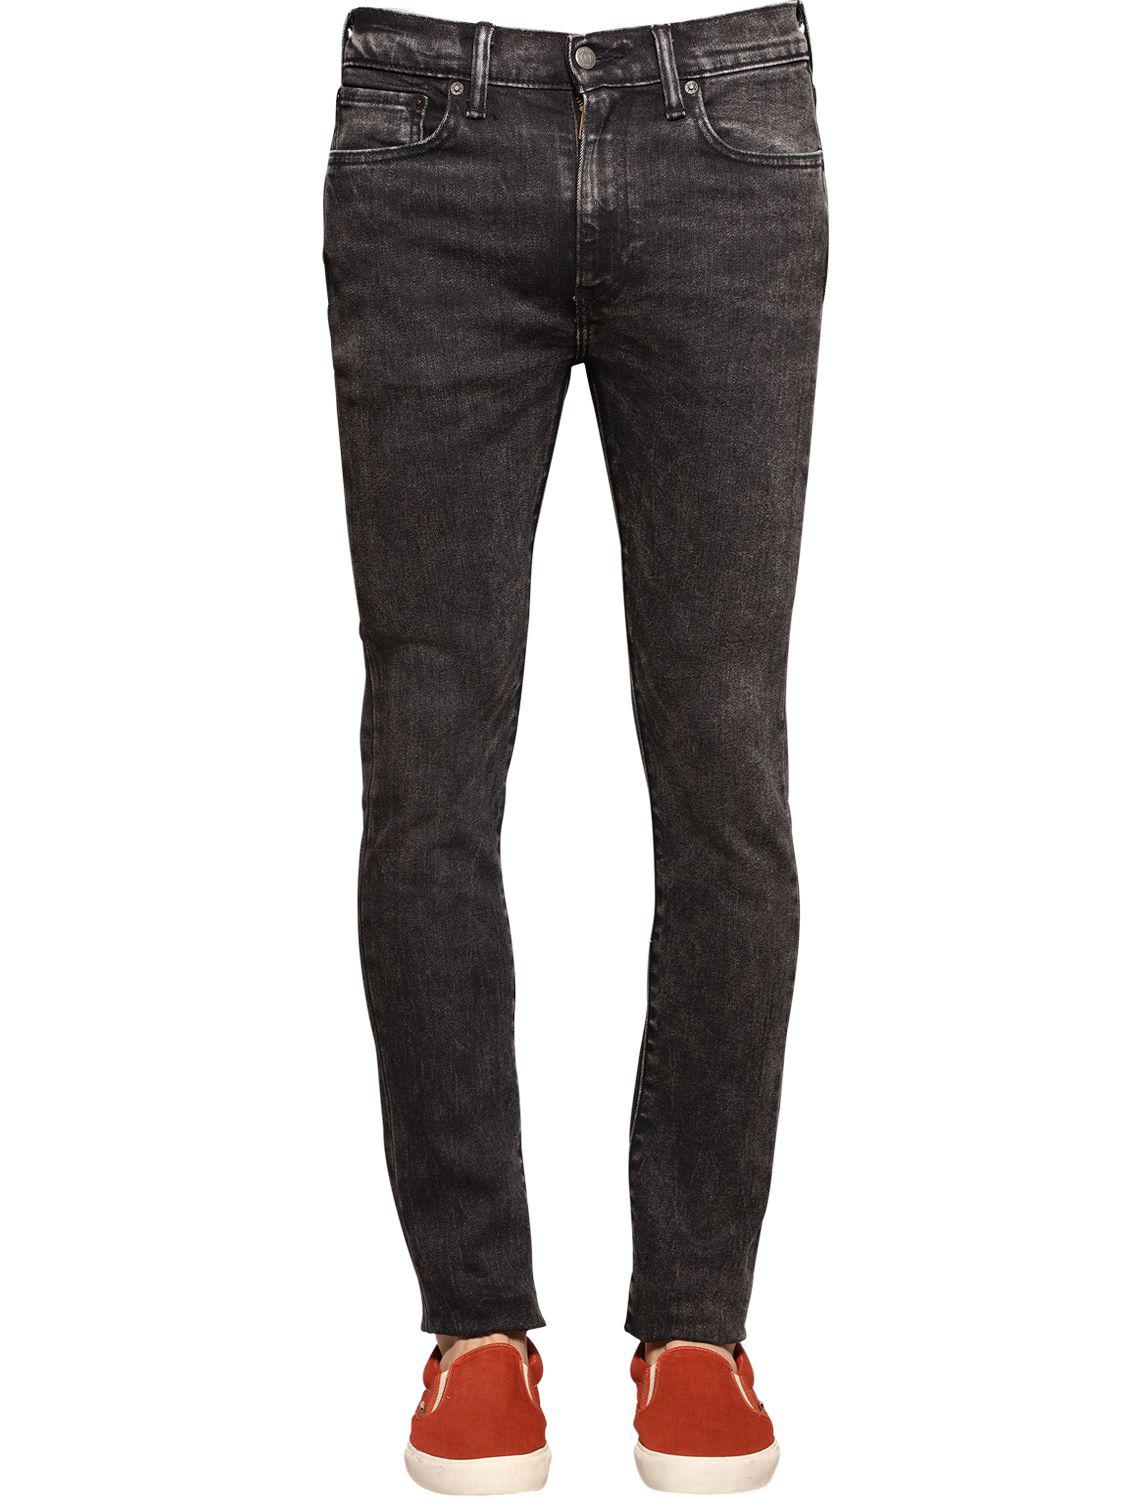 Lyst - Levi'S 519 Super Skinny Stretch Denim Jeans in Black for Men